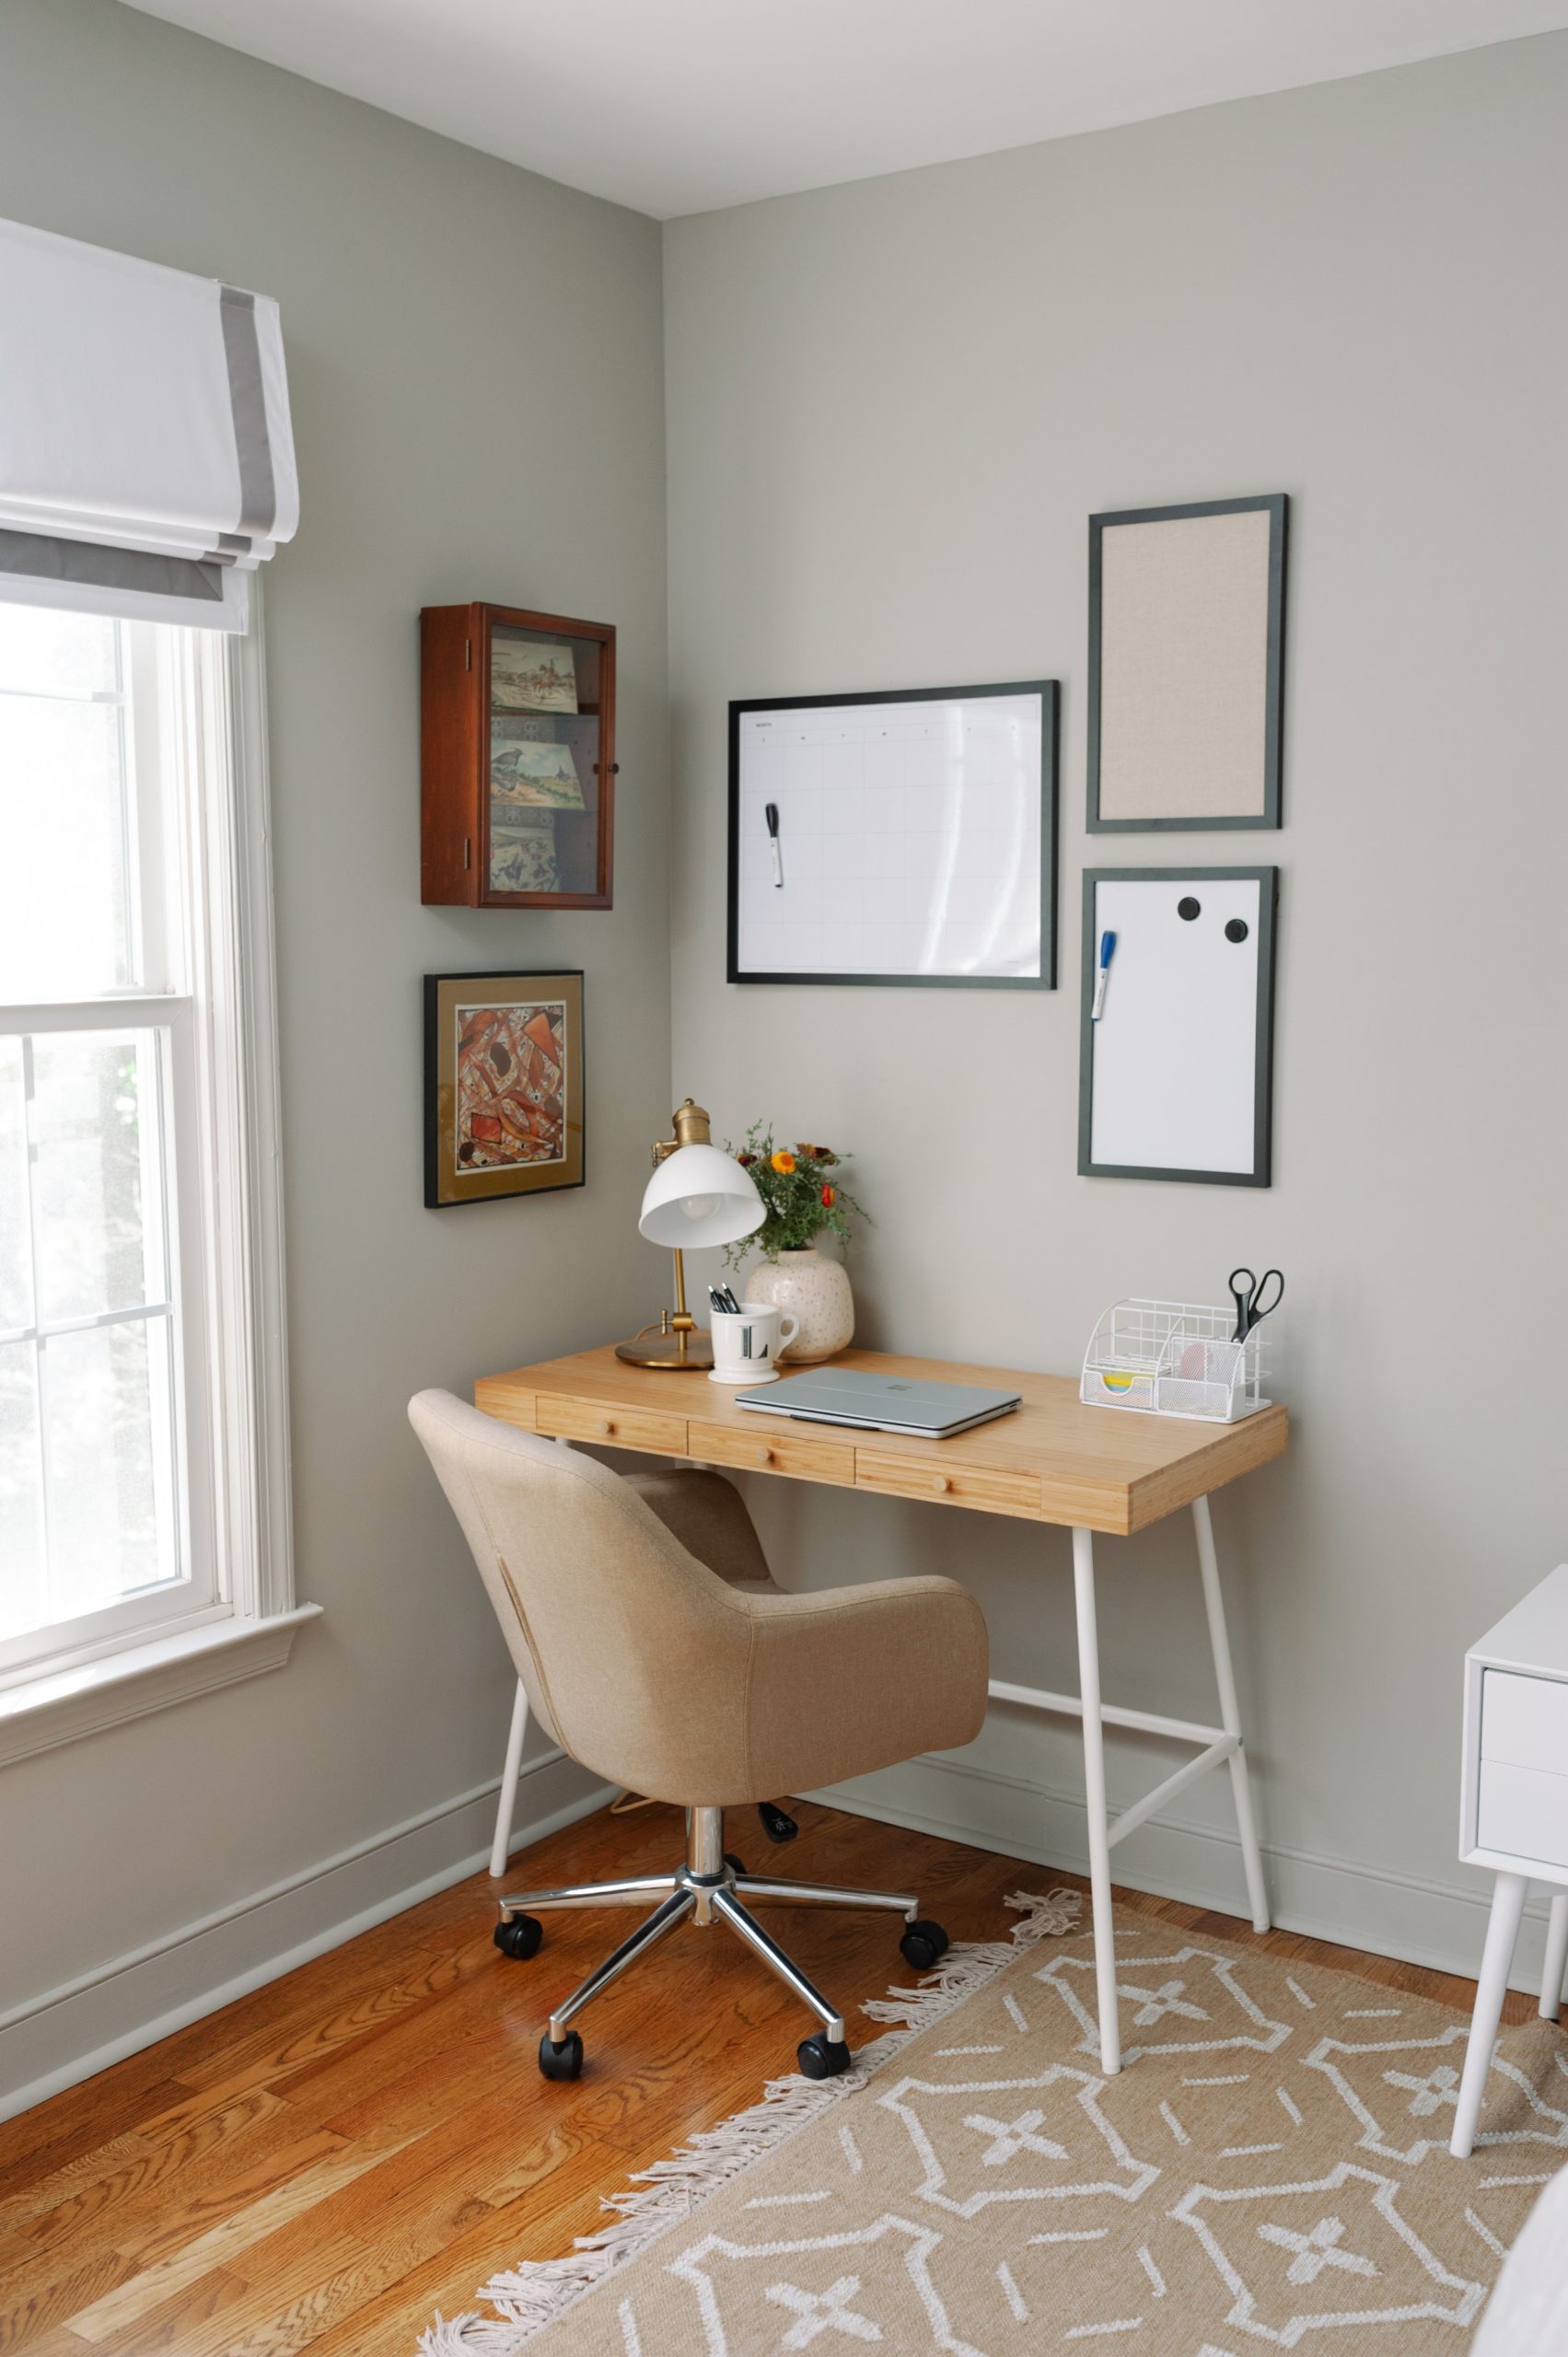 Office in Bedroom, Ikea desk, medium wood tone